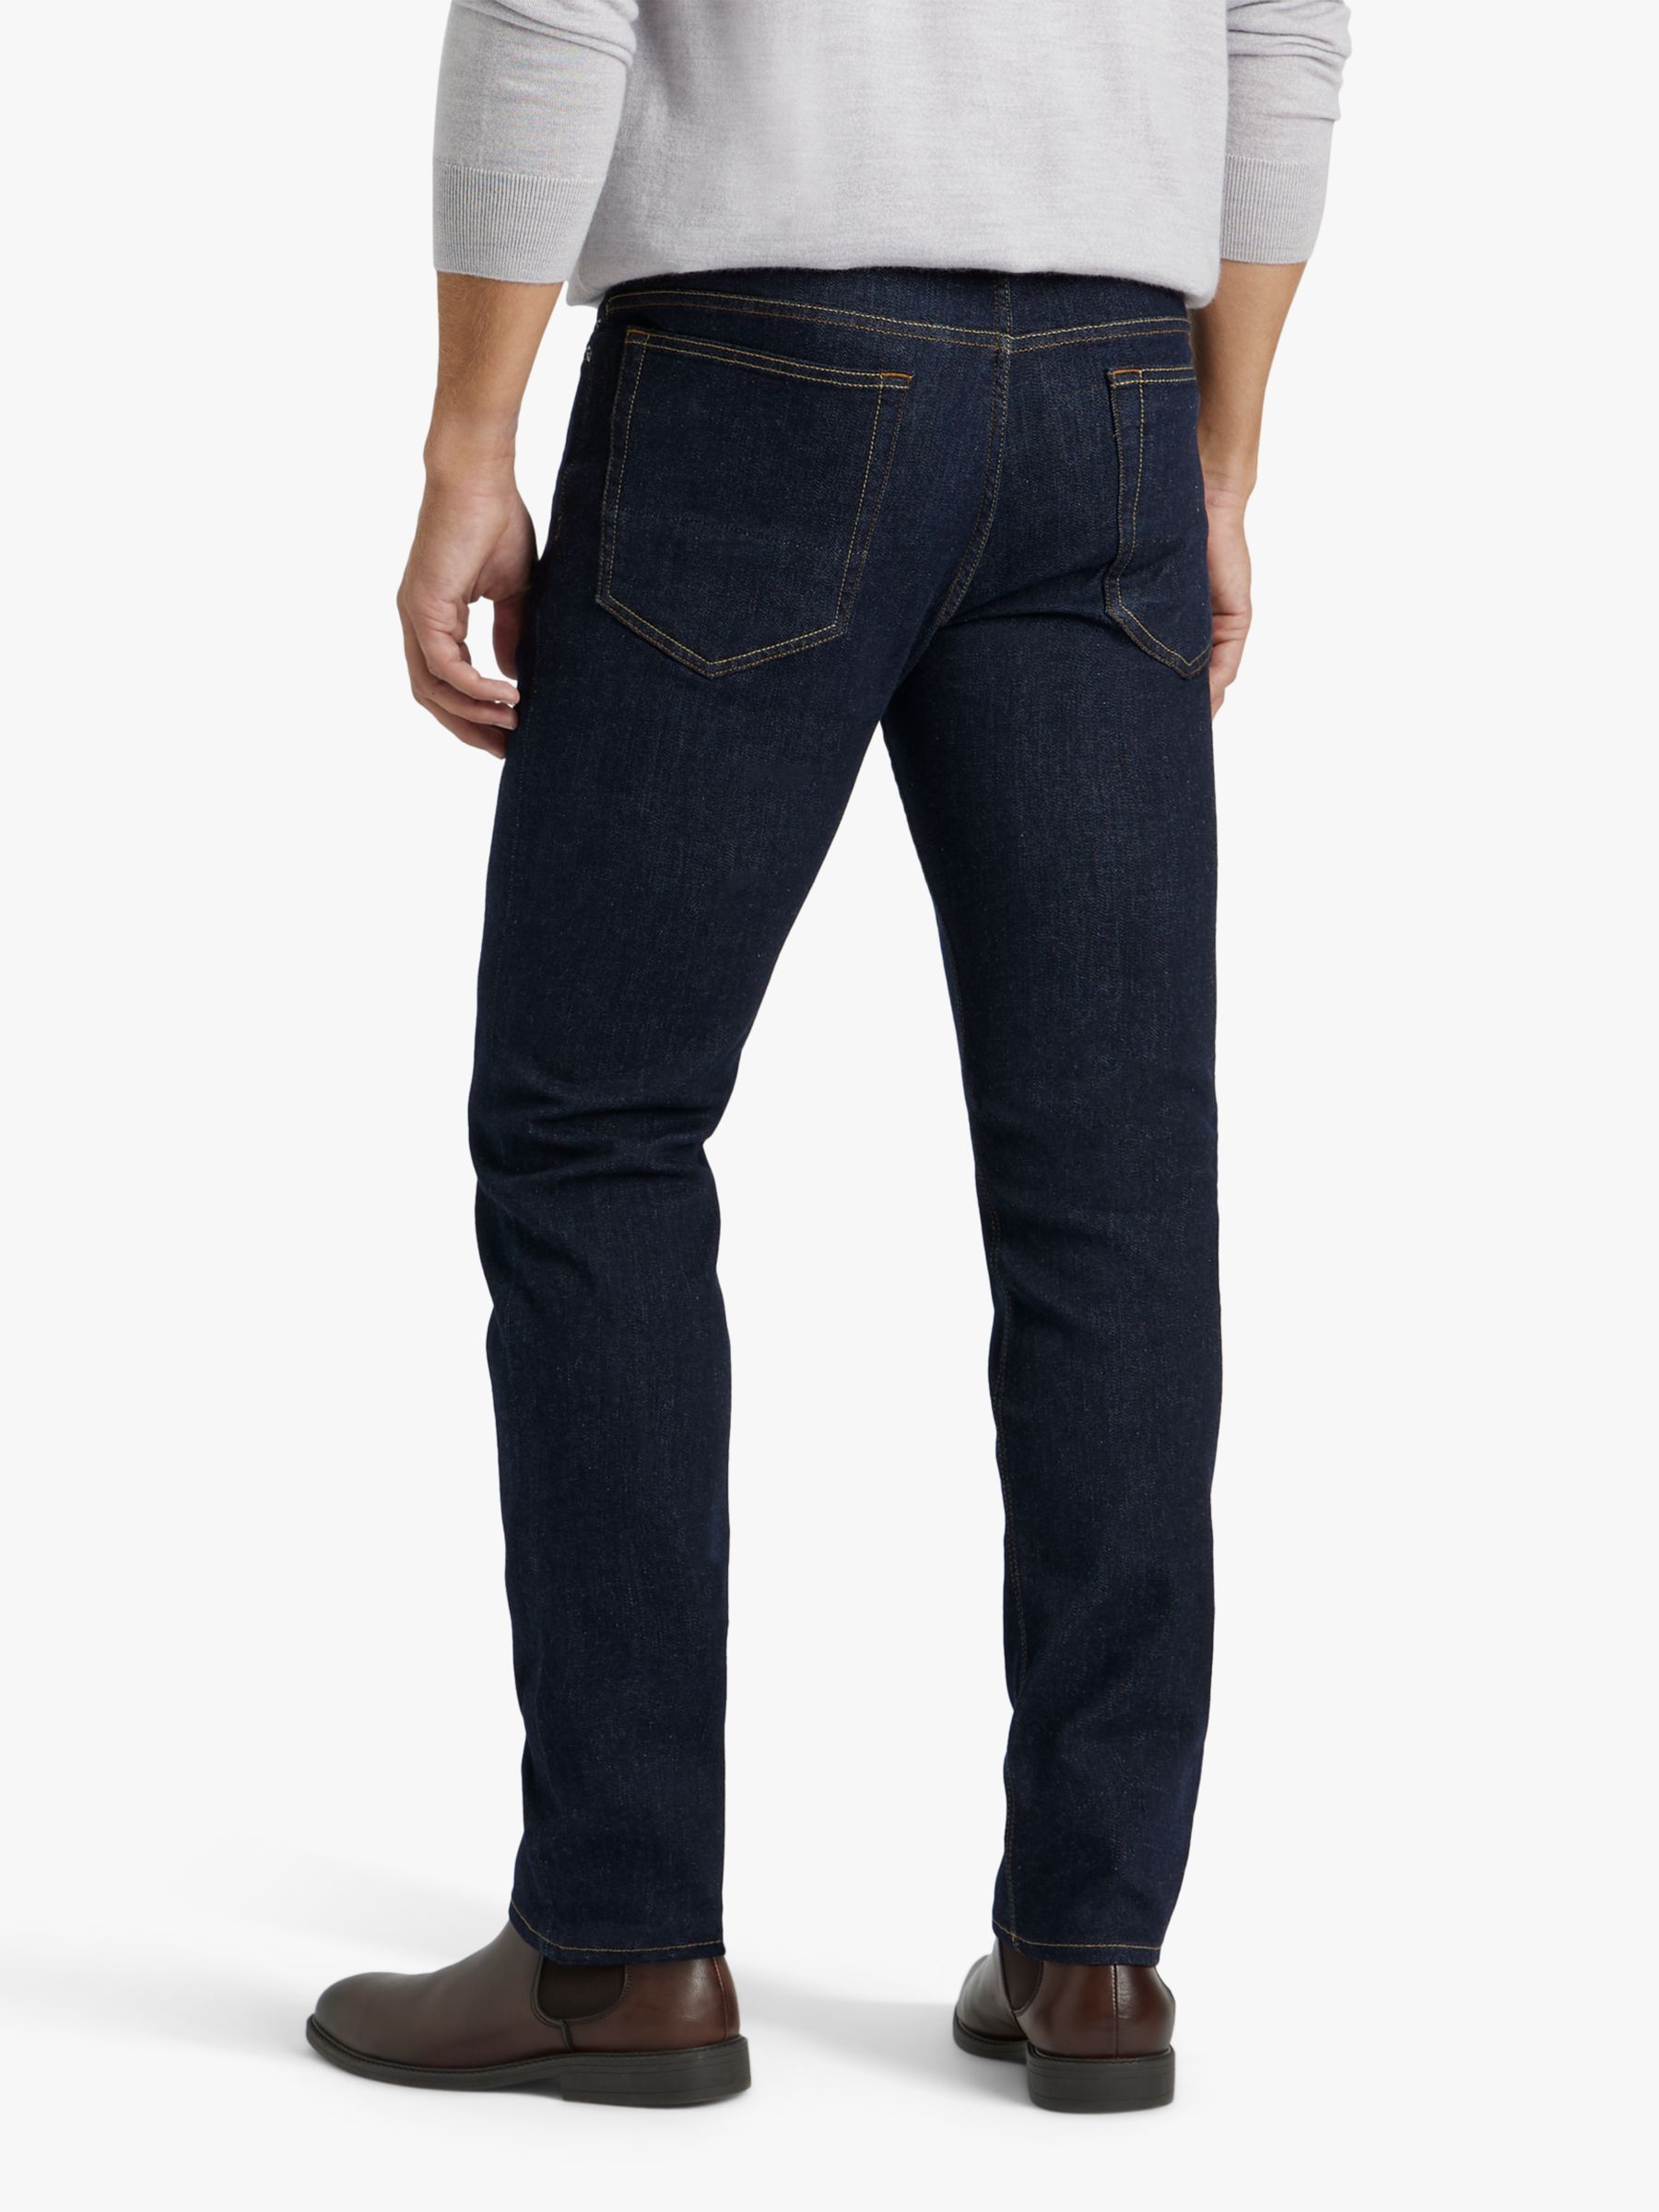 SPOKE 10oz Travel Denim Regular Thigh Jeans, Rinse at John Lewis & Partners